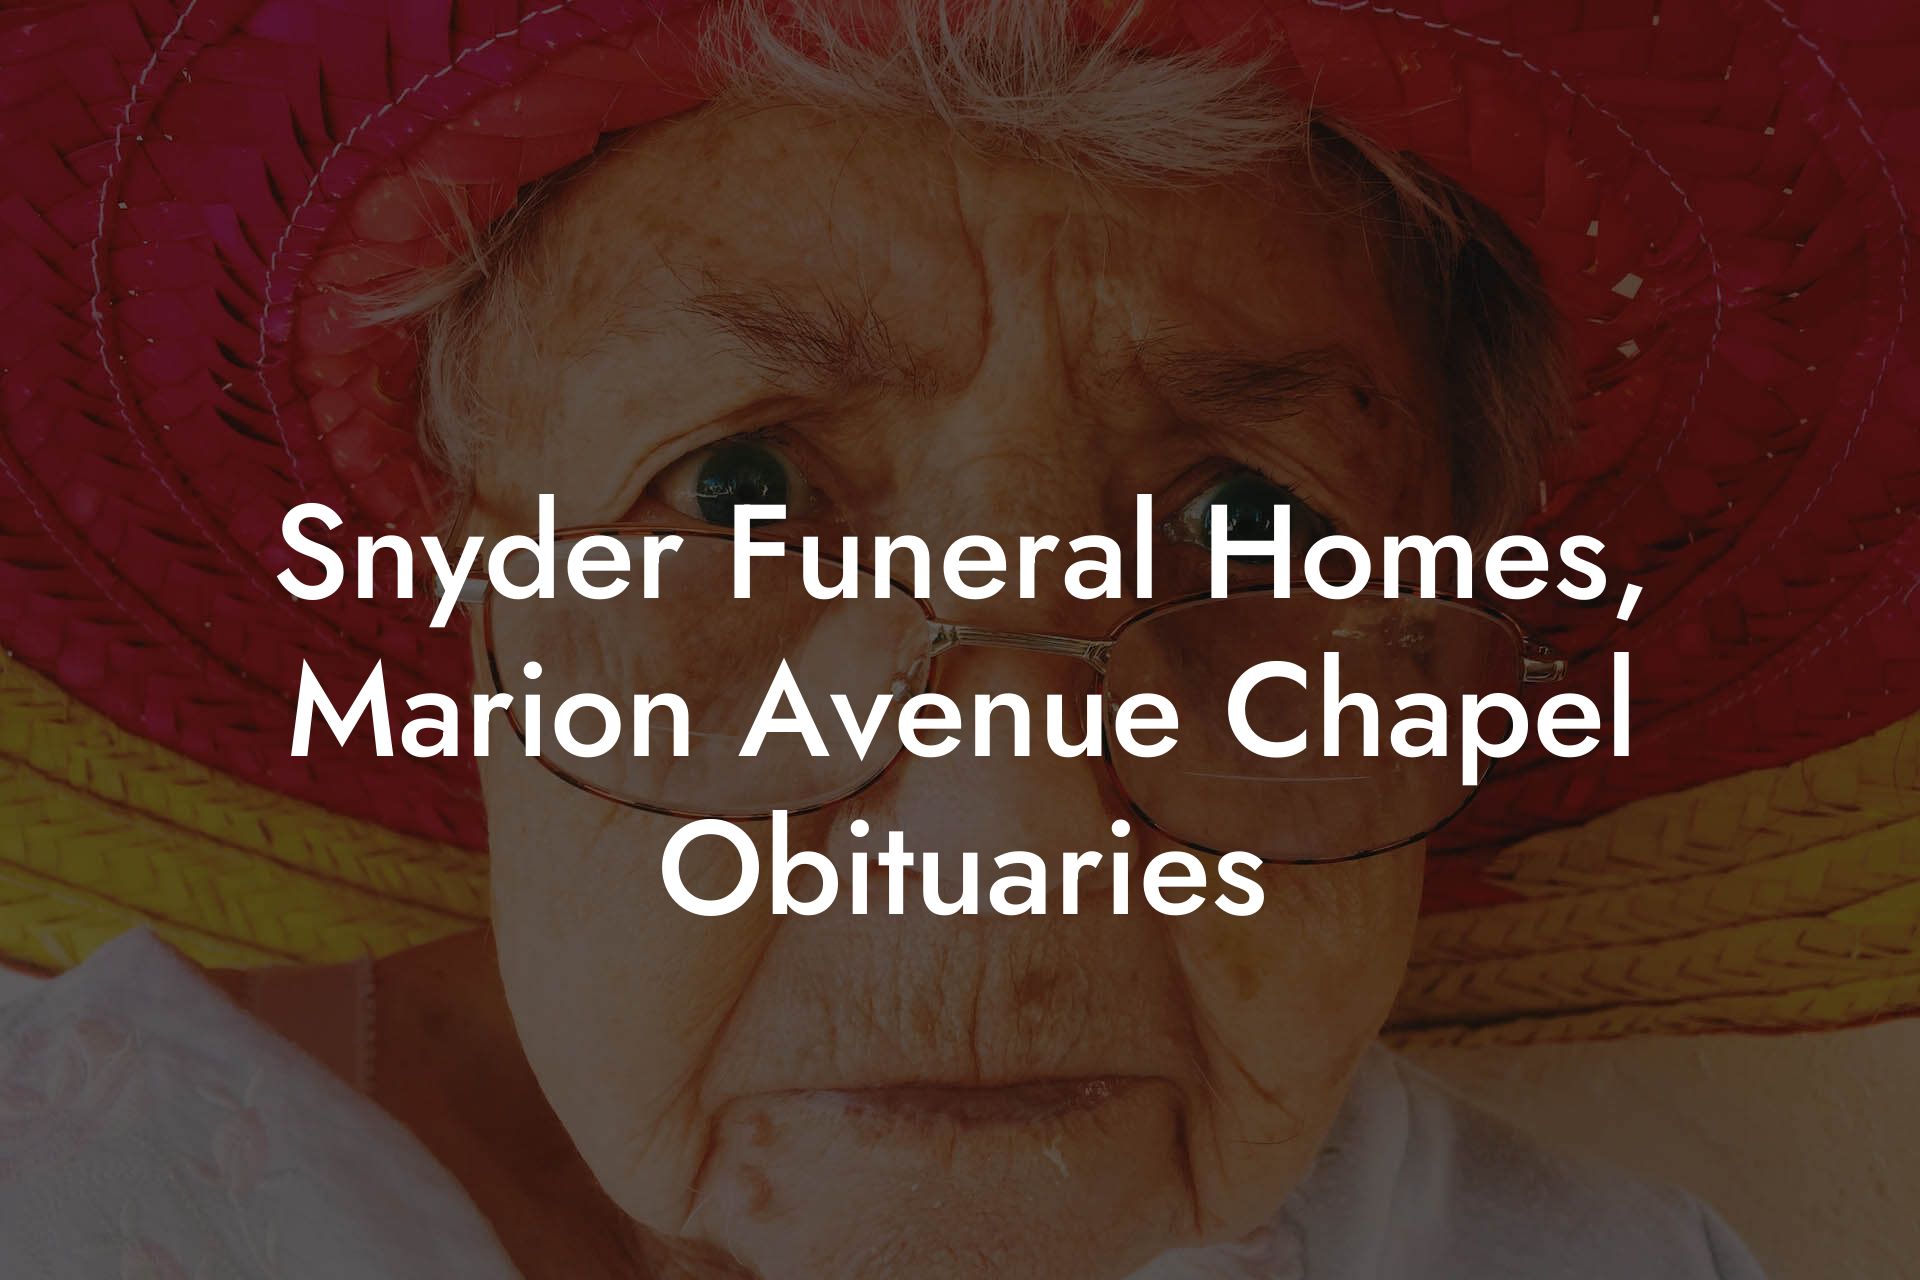 Snyder Funeral Homes, Marion Avenue Chapel Obituaries